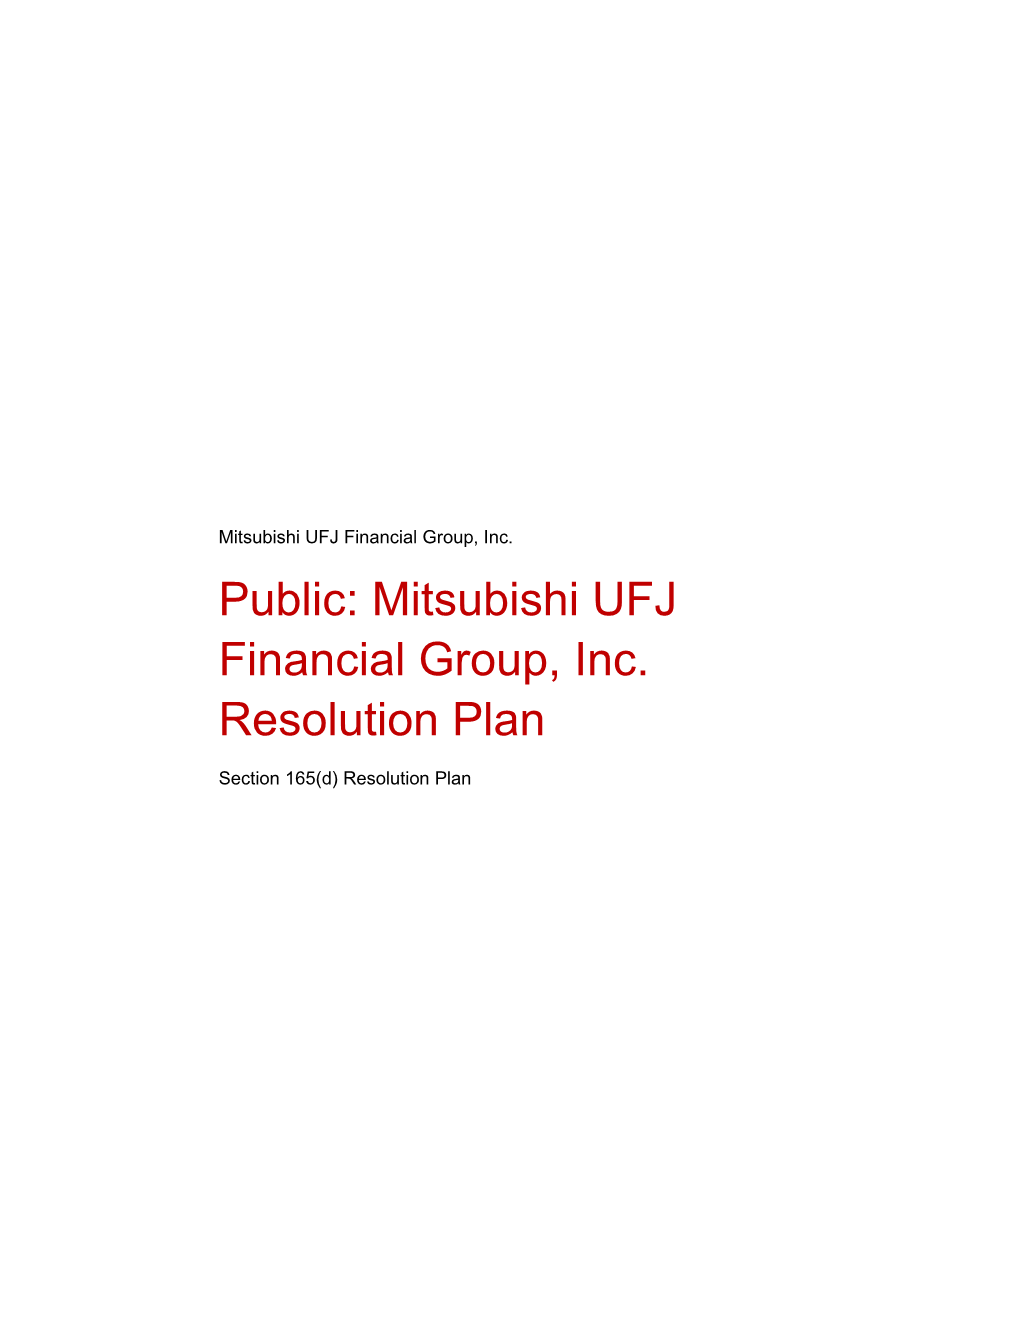 Public: Mitsubishi UFJ Financial Group, Inc. Resolution Plan